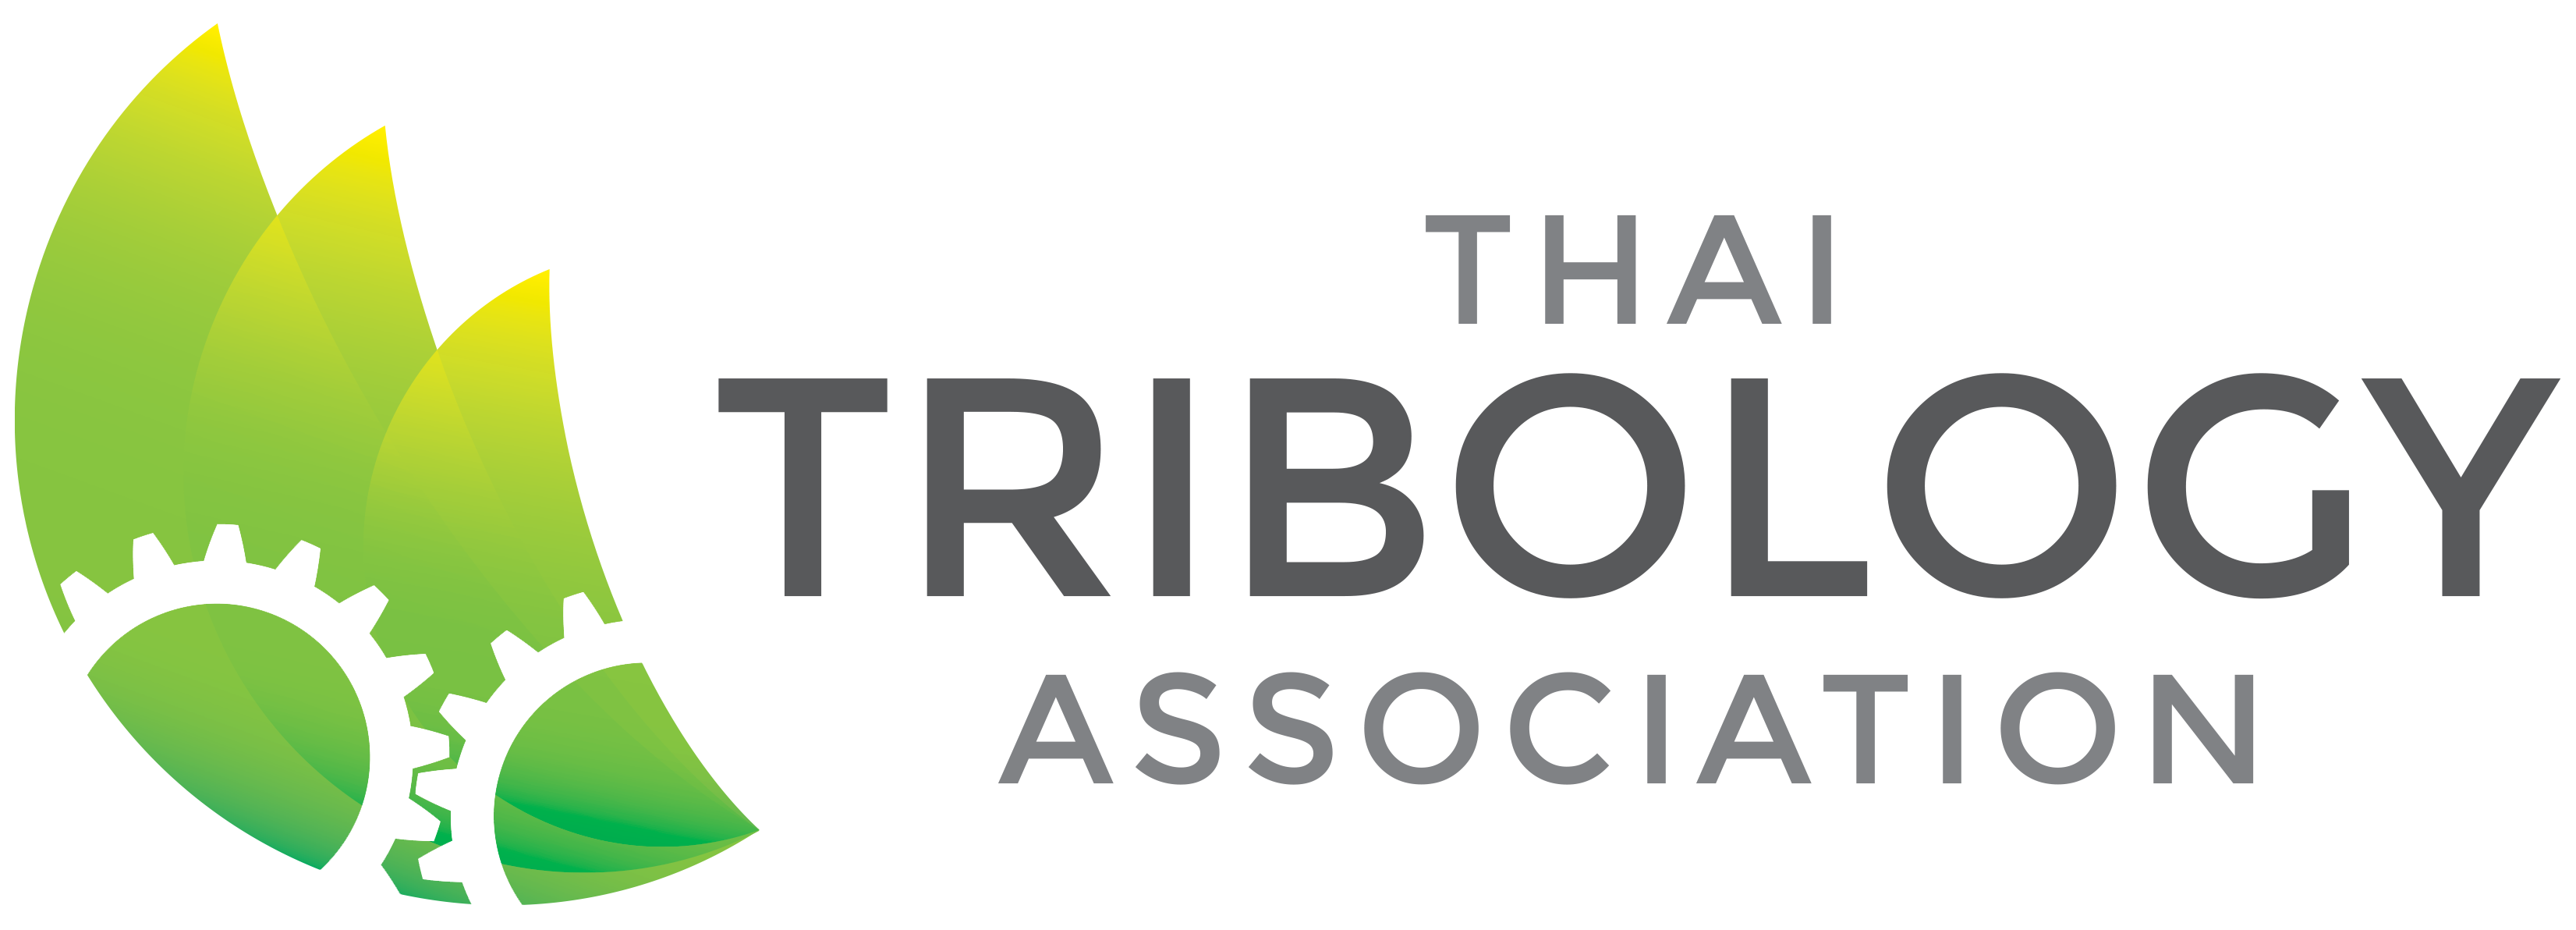 Thai Tribology Association